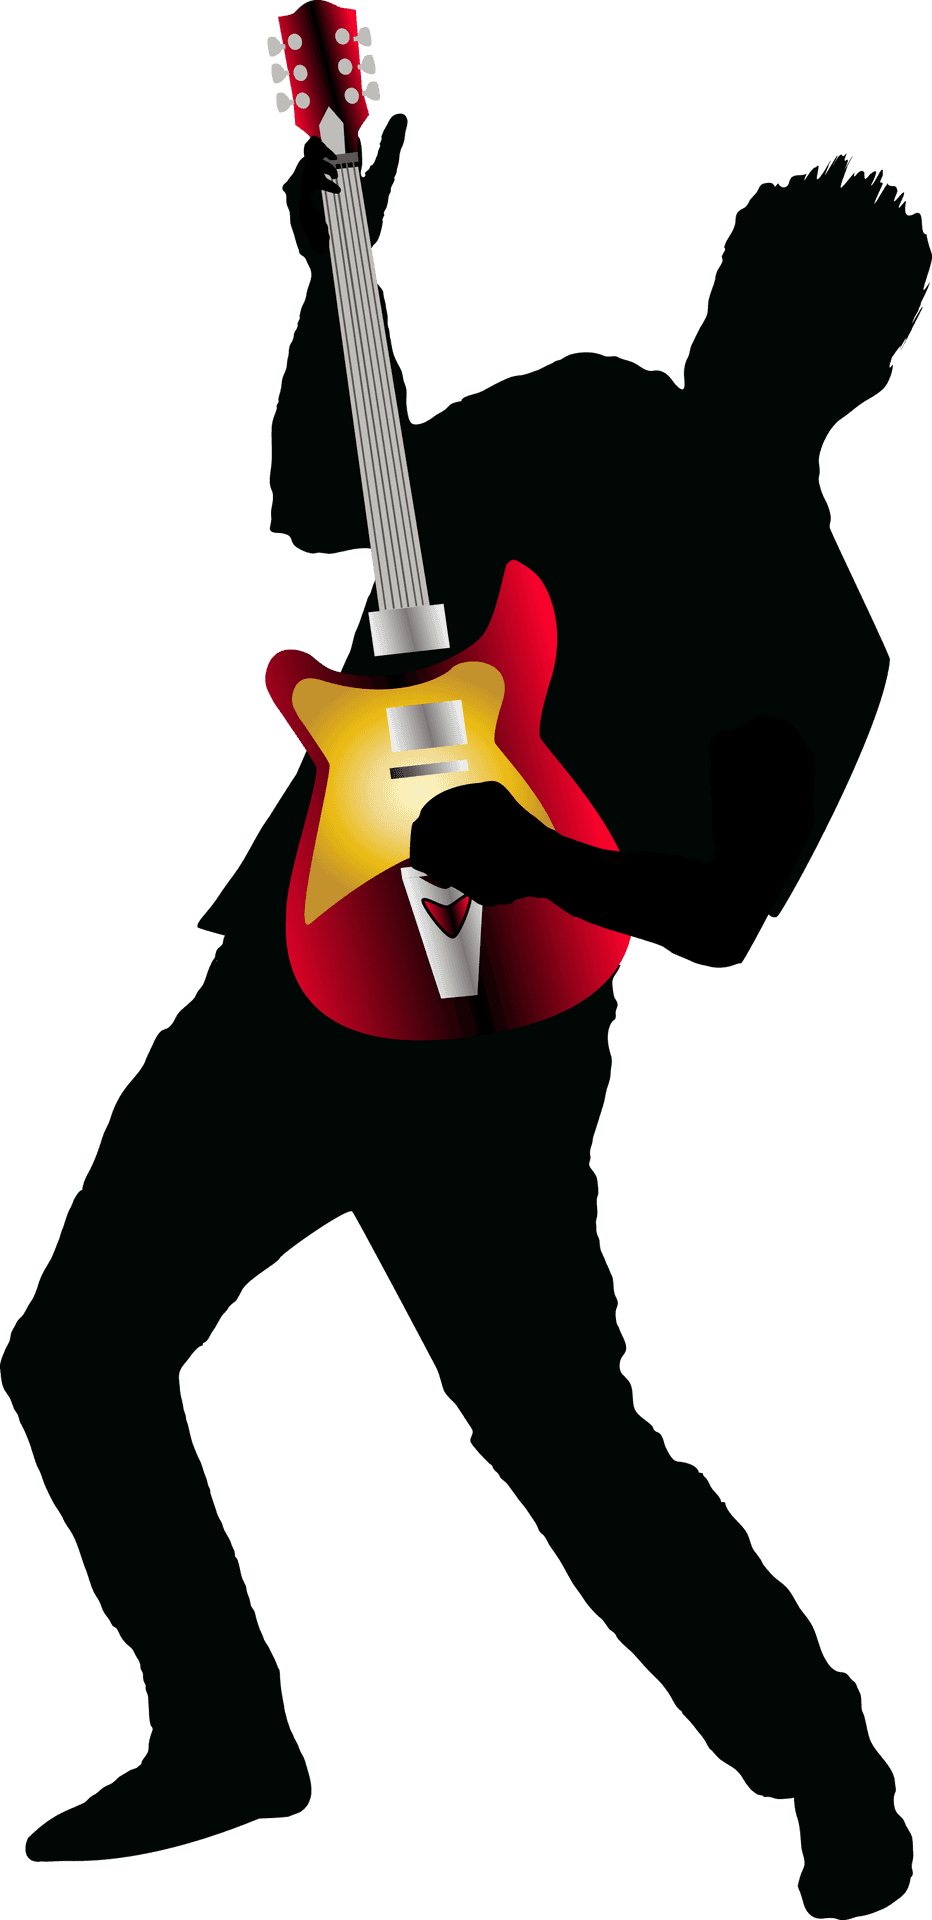 Rockstar Silhouette Guitarist.png PNG